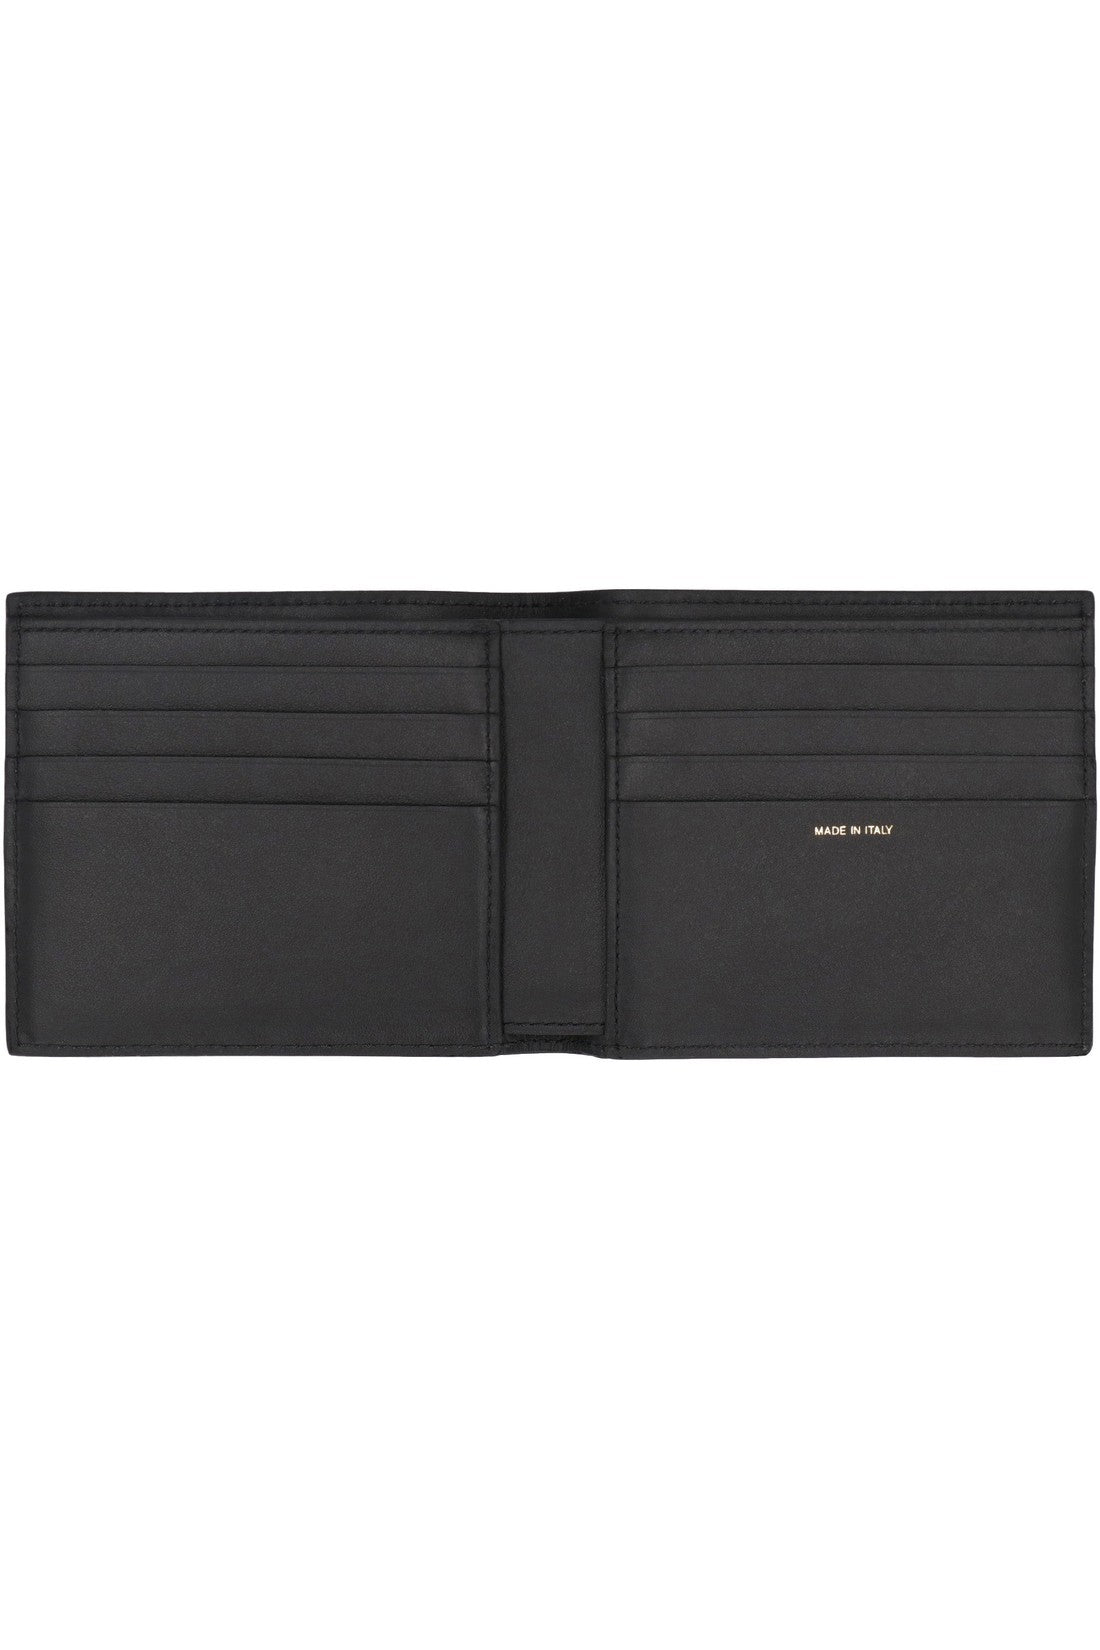 Paul Smith-OUTLET-SALE-Leather wallet-ARCHIVIST